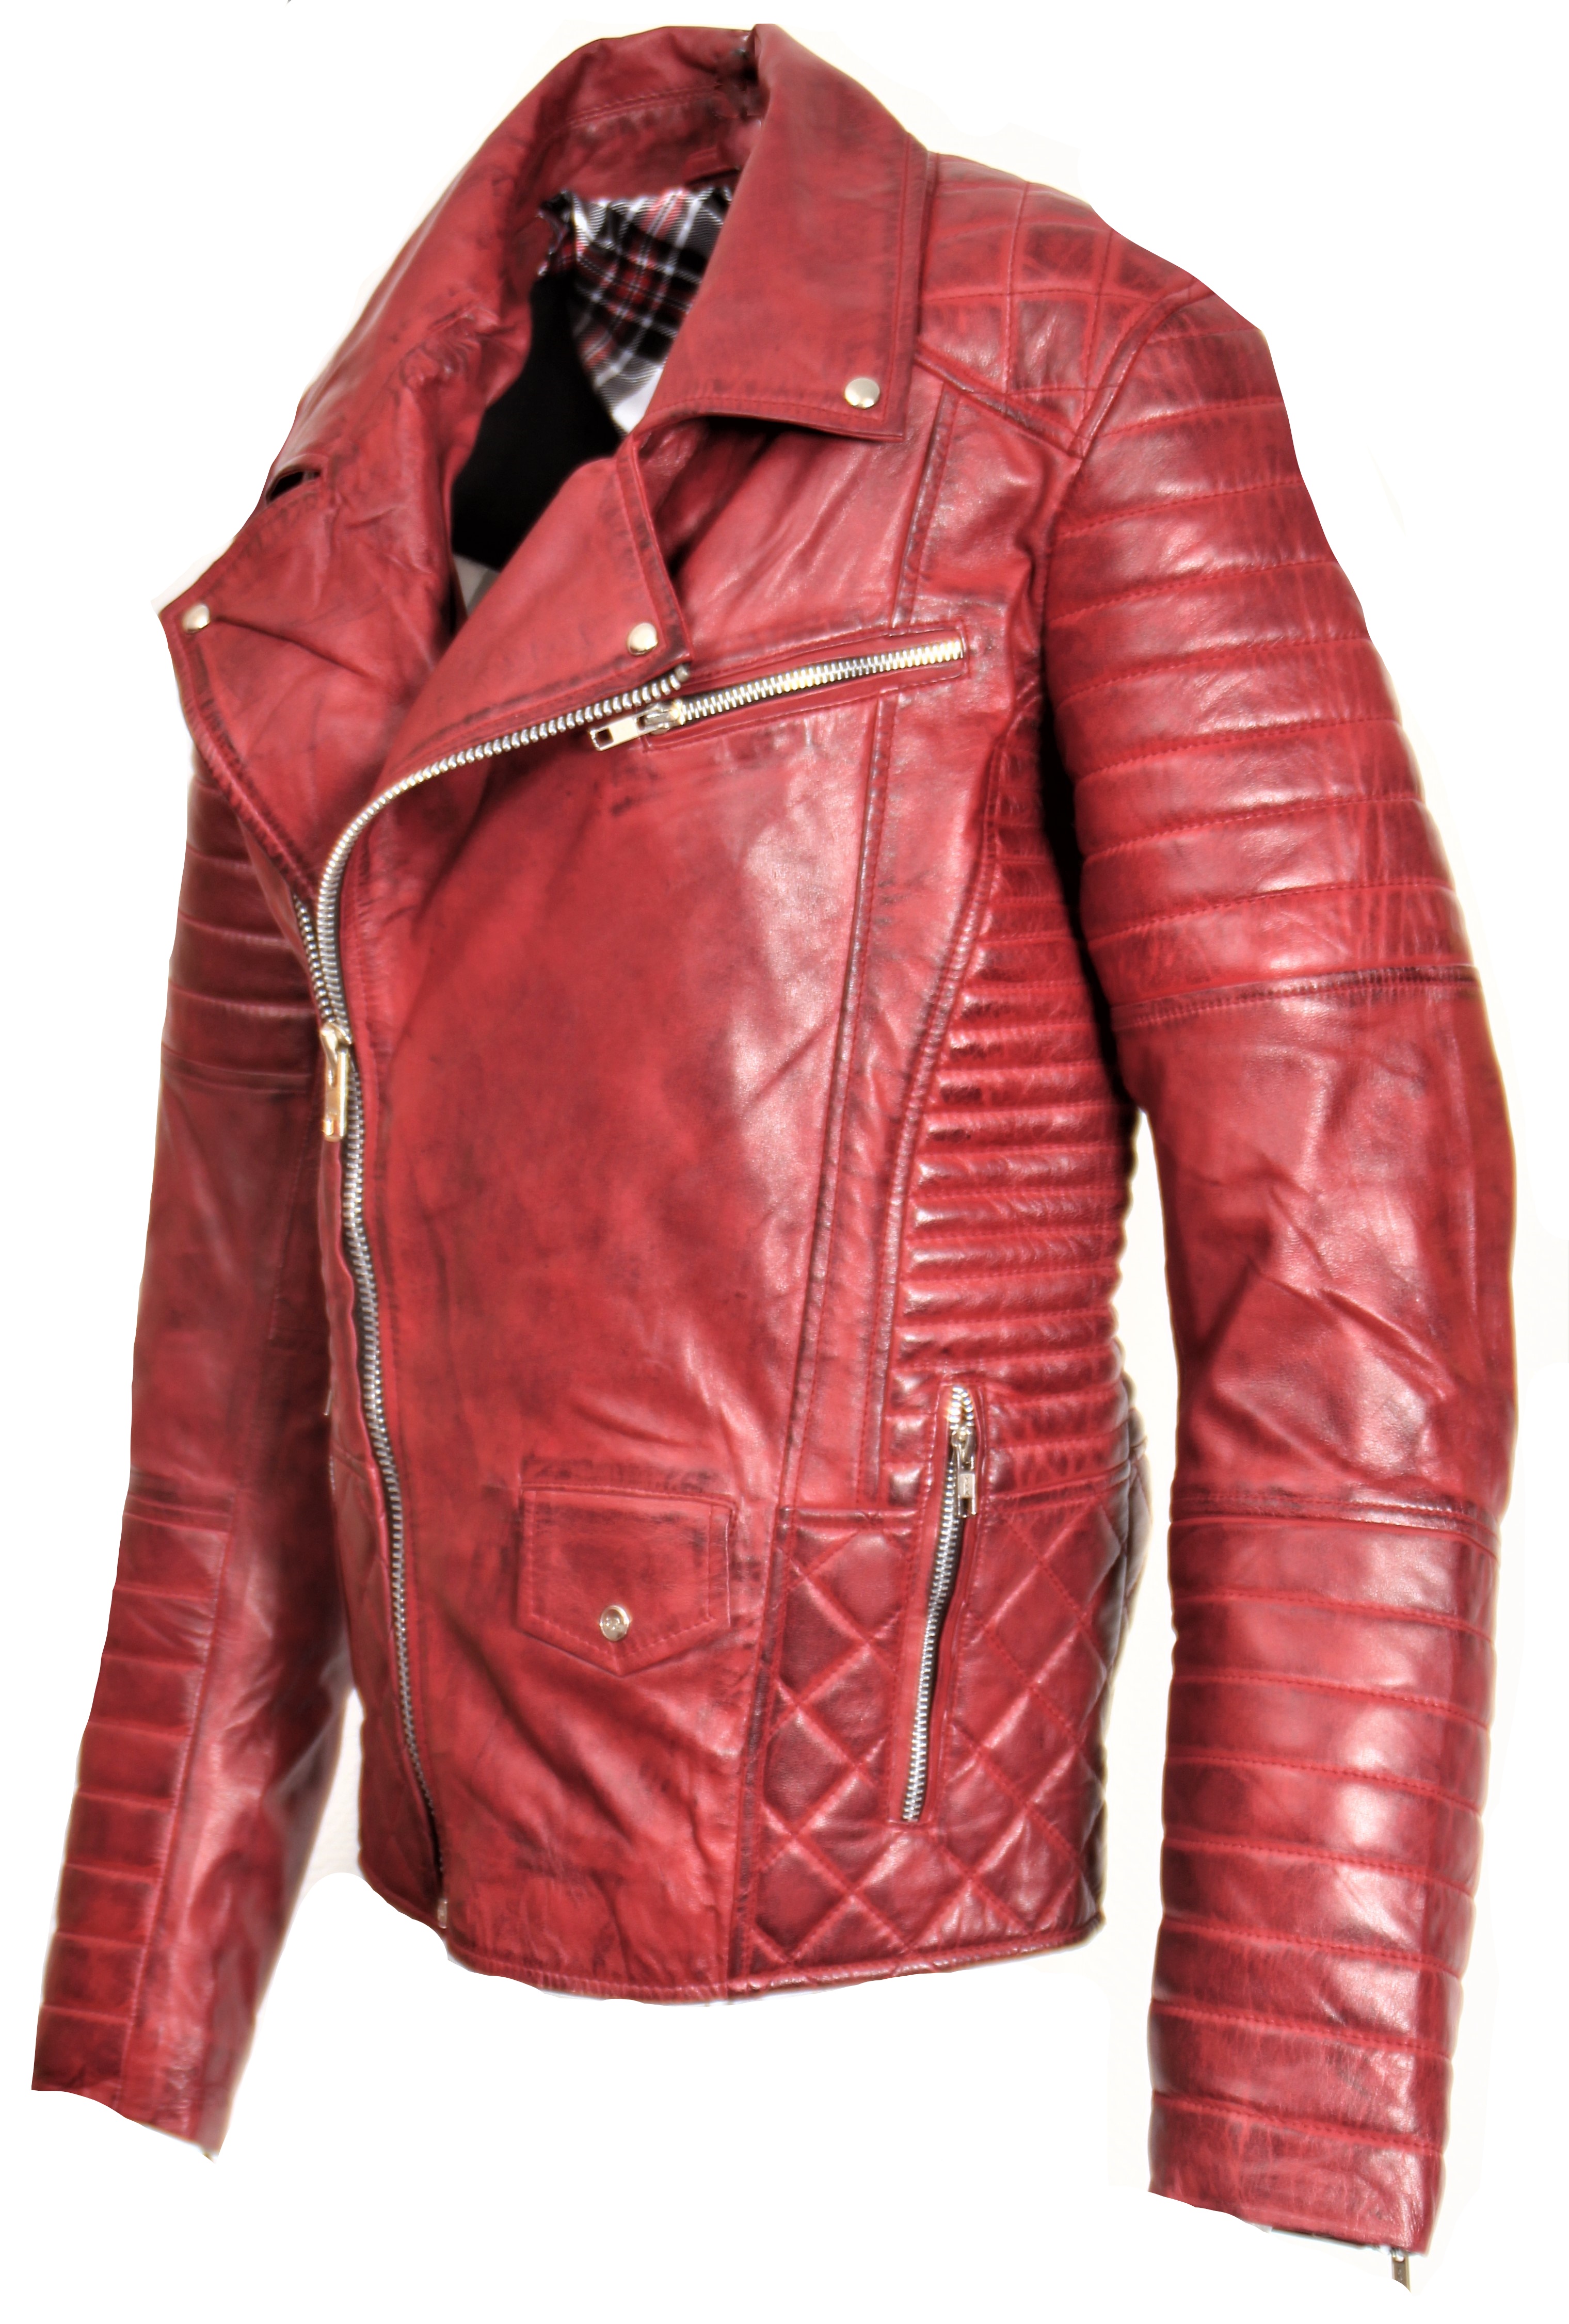 Veste en cuir veste de motard VRAI cuir  regard usagé  rouge hommes